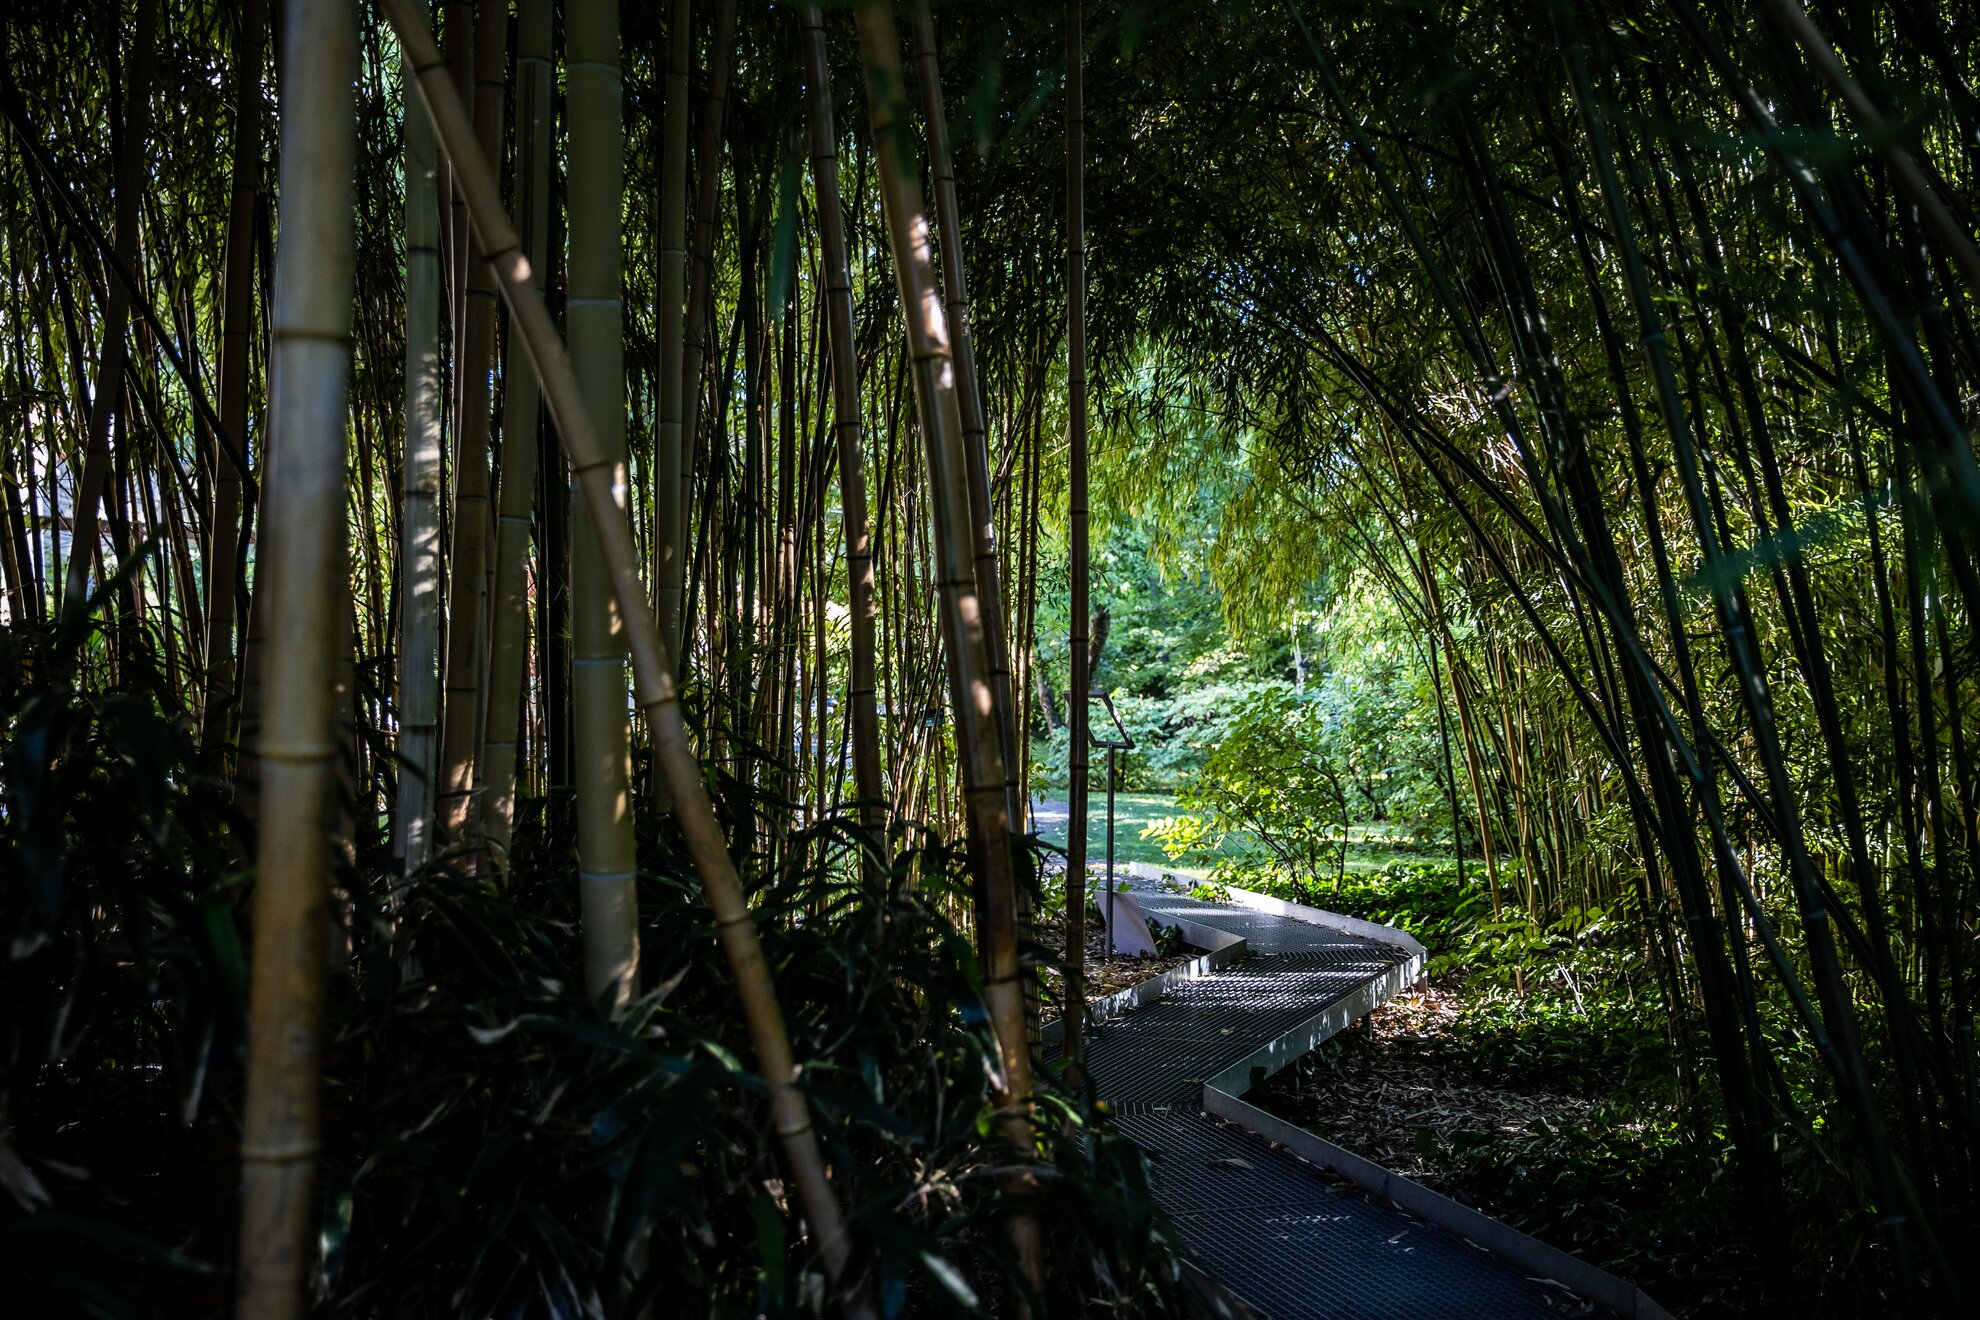 Magical Garden light show at ELTE Botanical Gardens